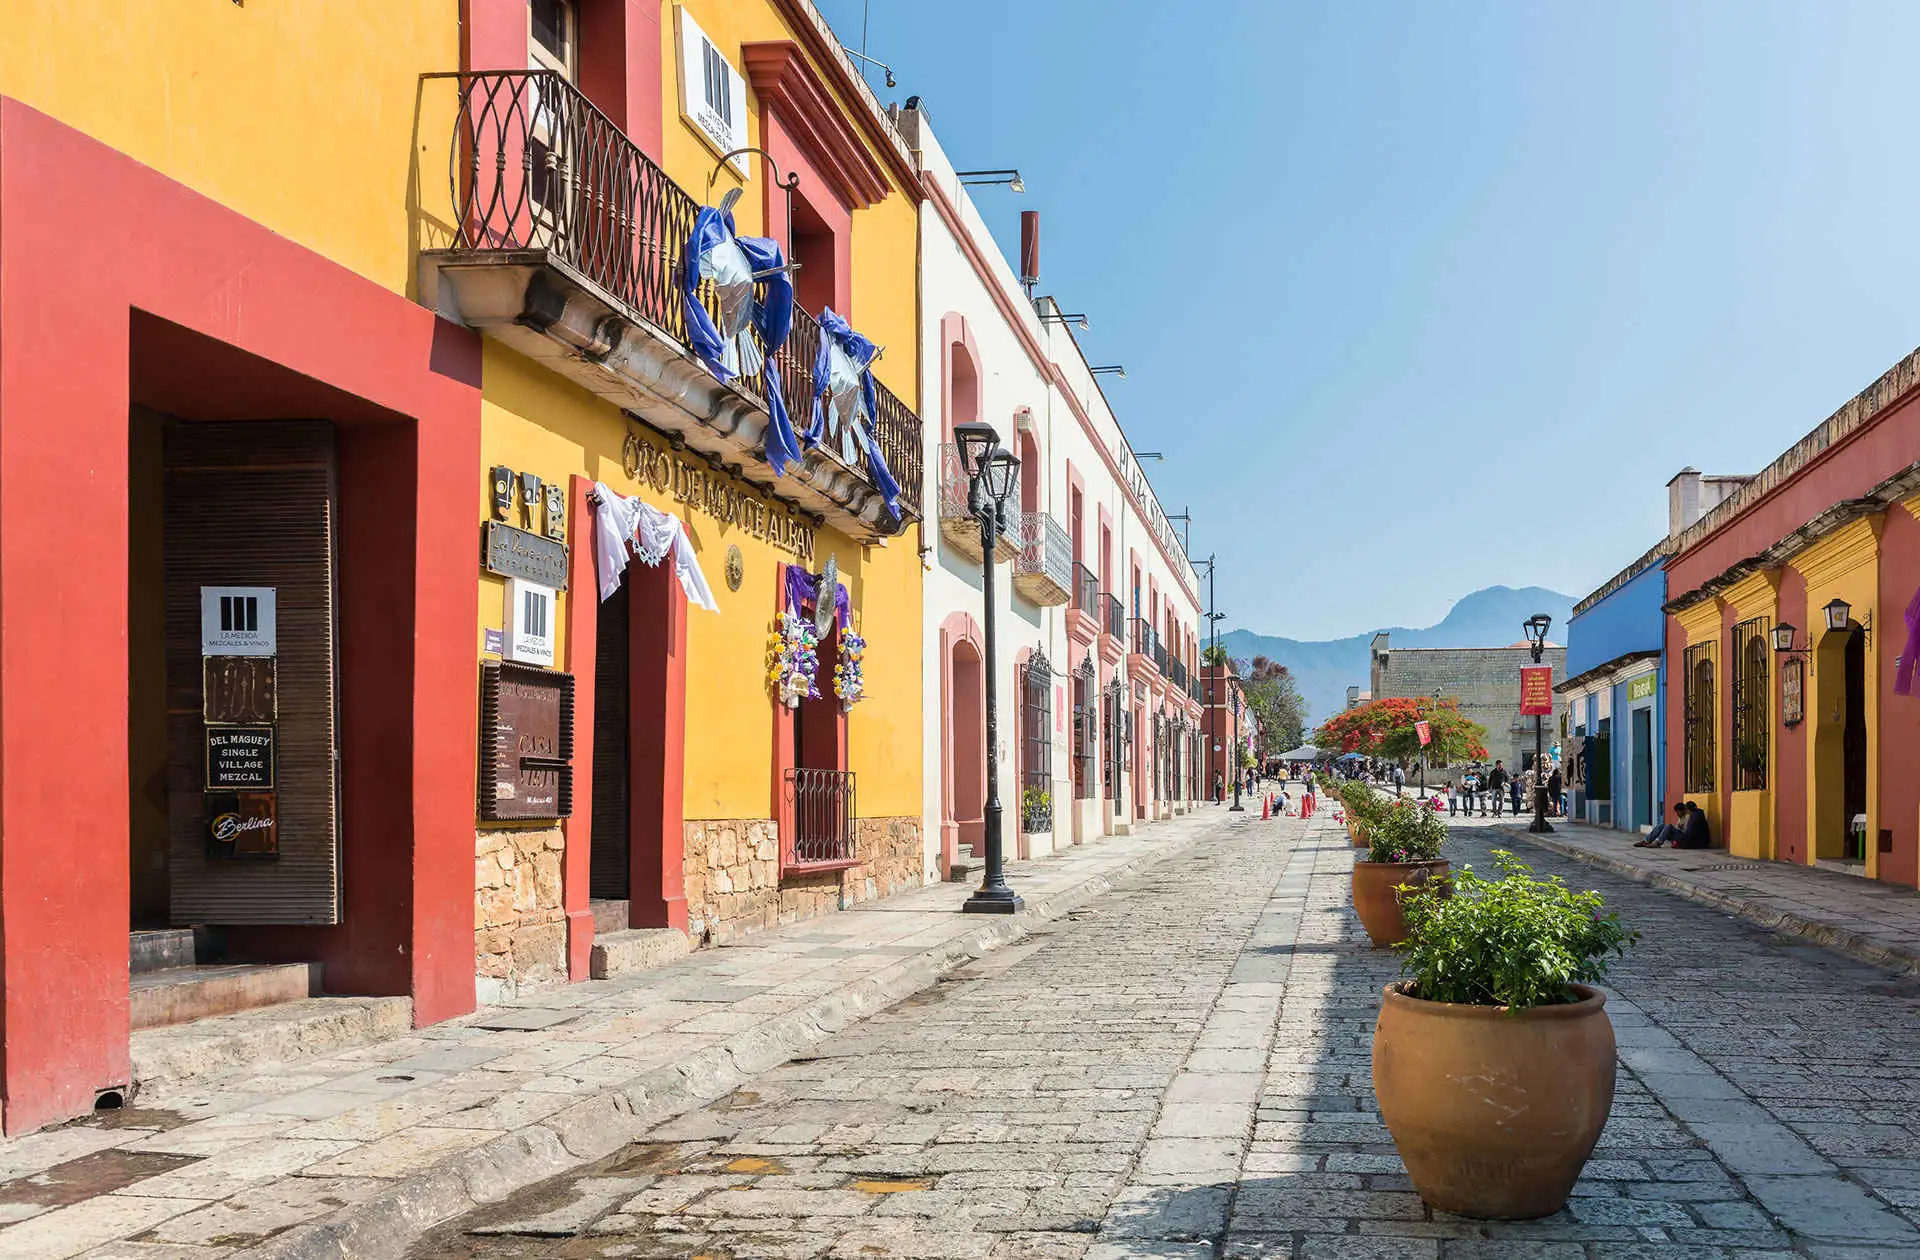 Street scene in Oaxaca; Photo Courtesy of Angelina Pilarinos /Shutterstock.com